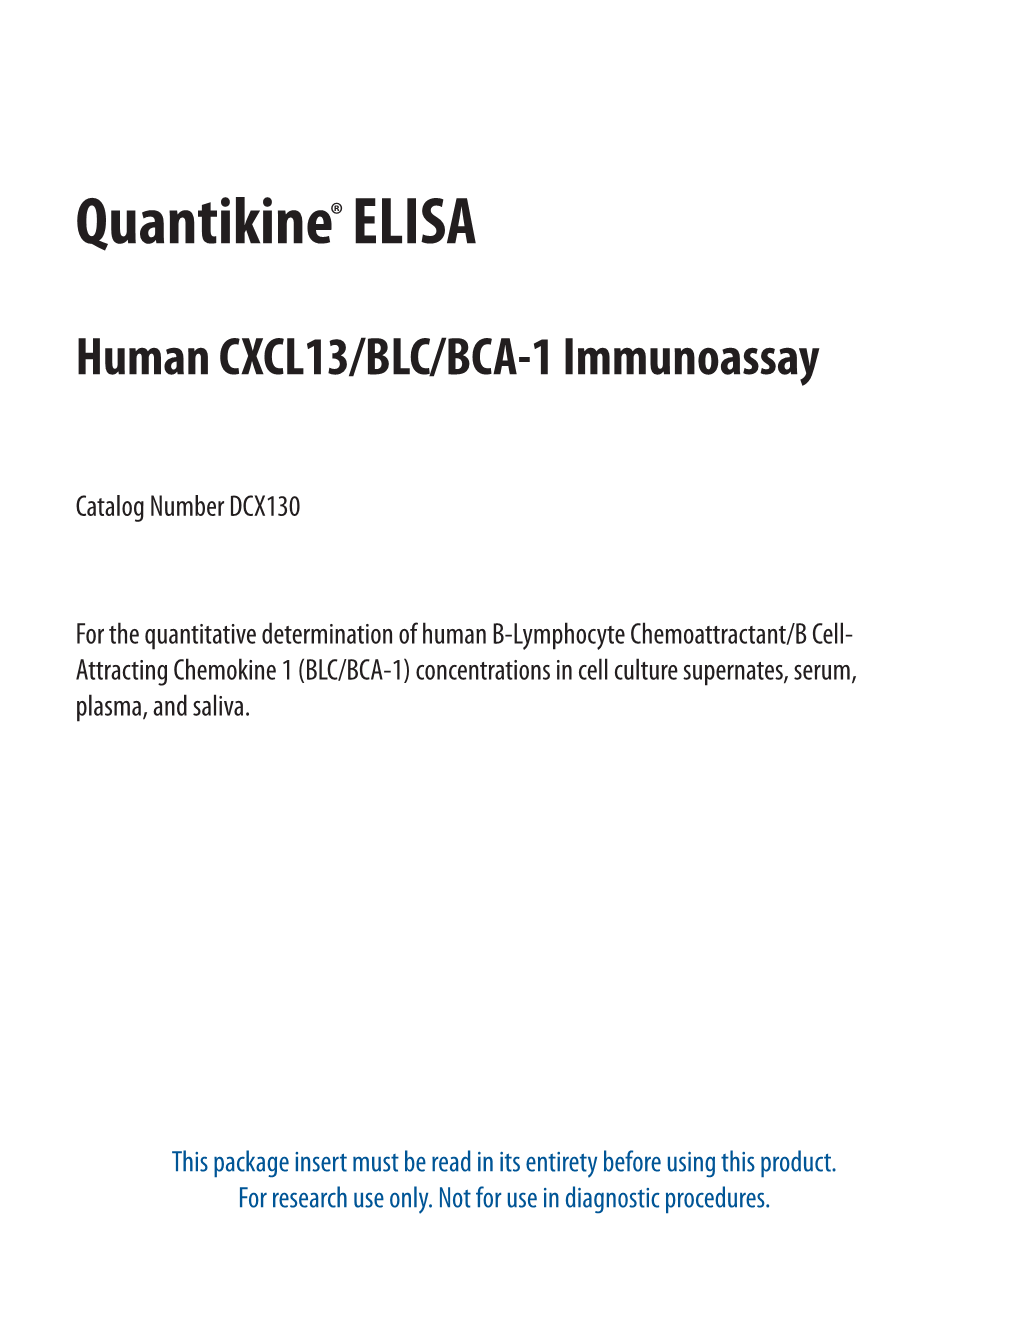 Human CXCL13/BLC/BCA-1 Quantikine